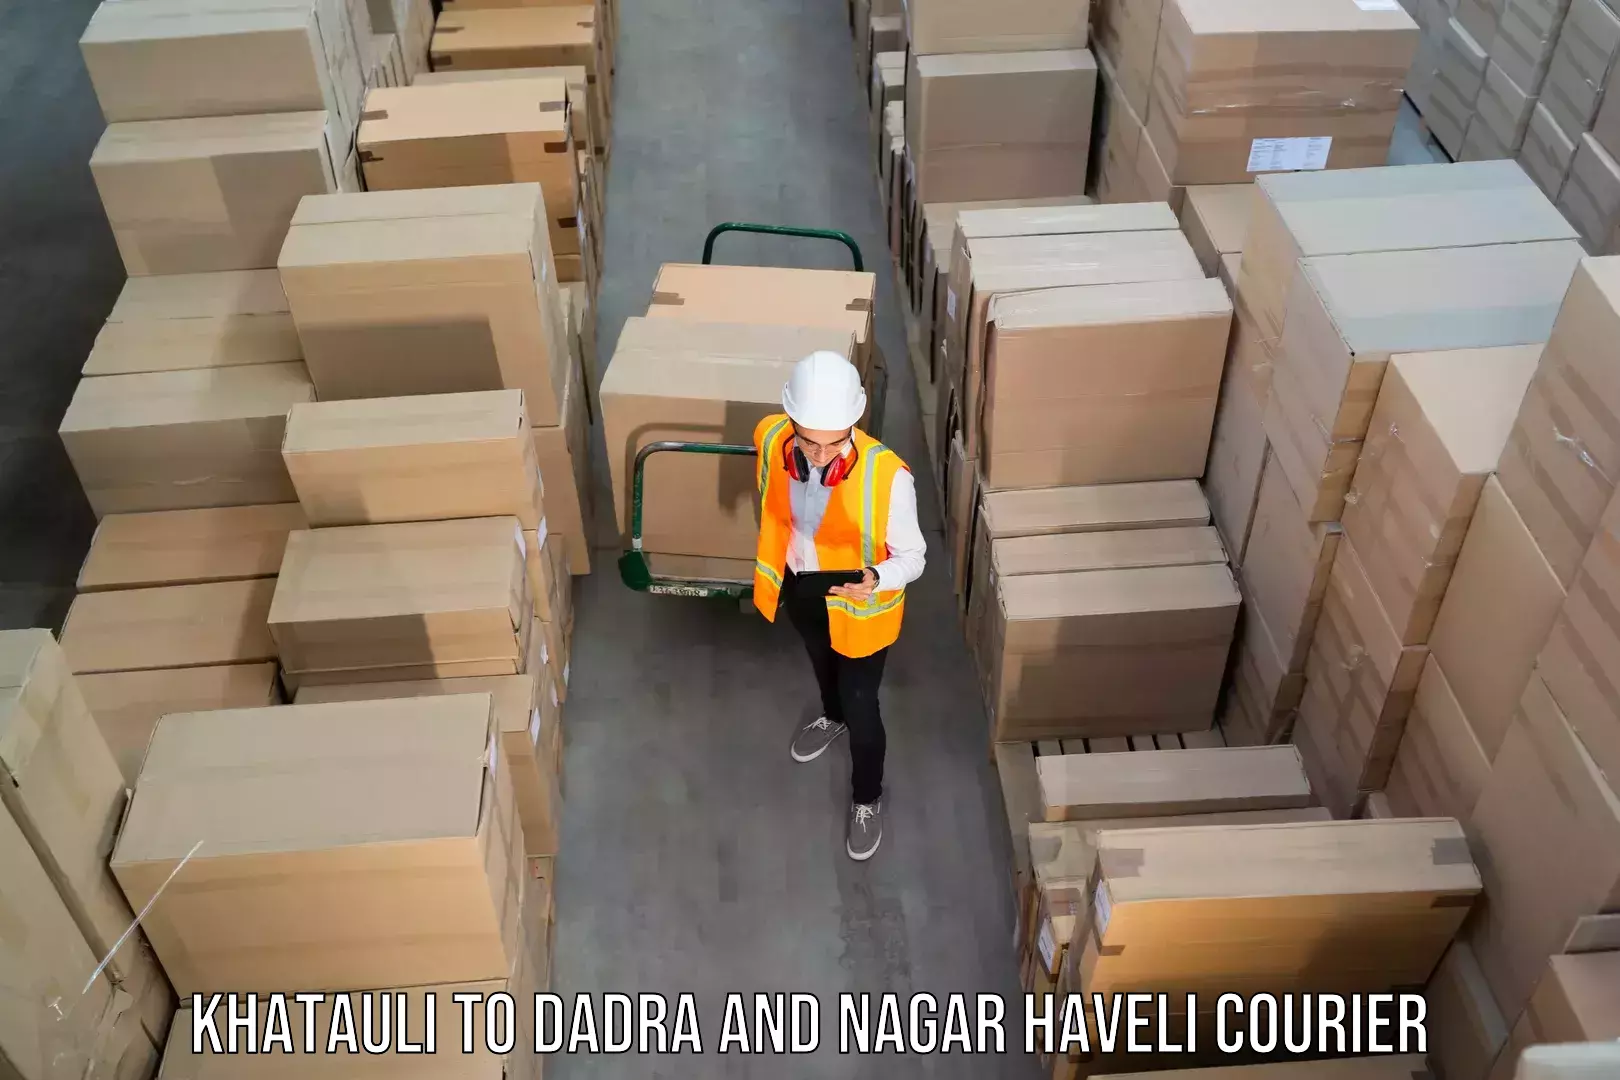 Courier service comparison Khatauli to Dadra and Nagar Haveli